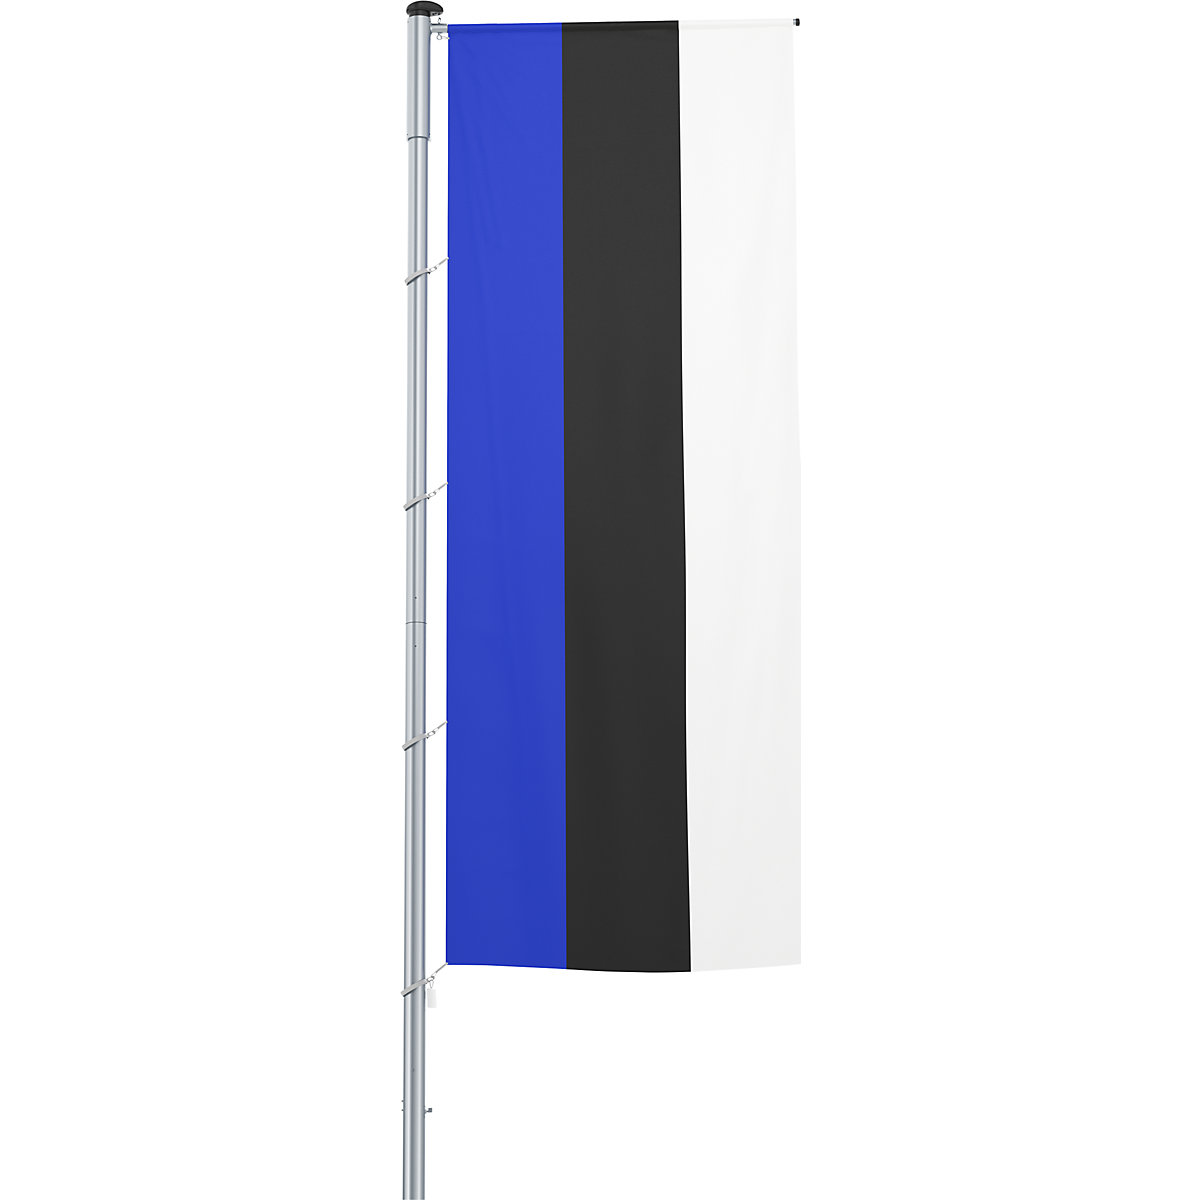 Mannus – Bandera con pluma/bandera del país, formato 1,2 x 3 m, Estonia